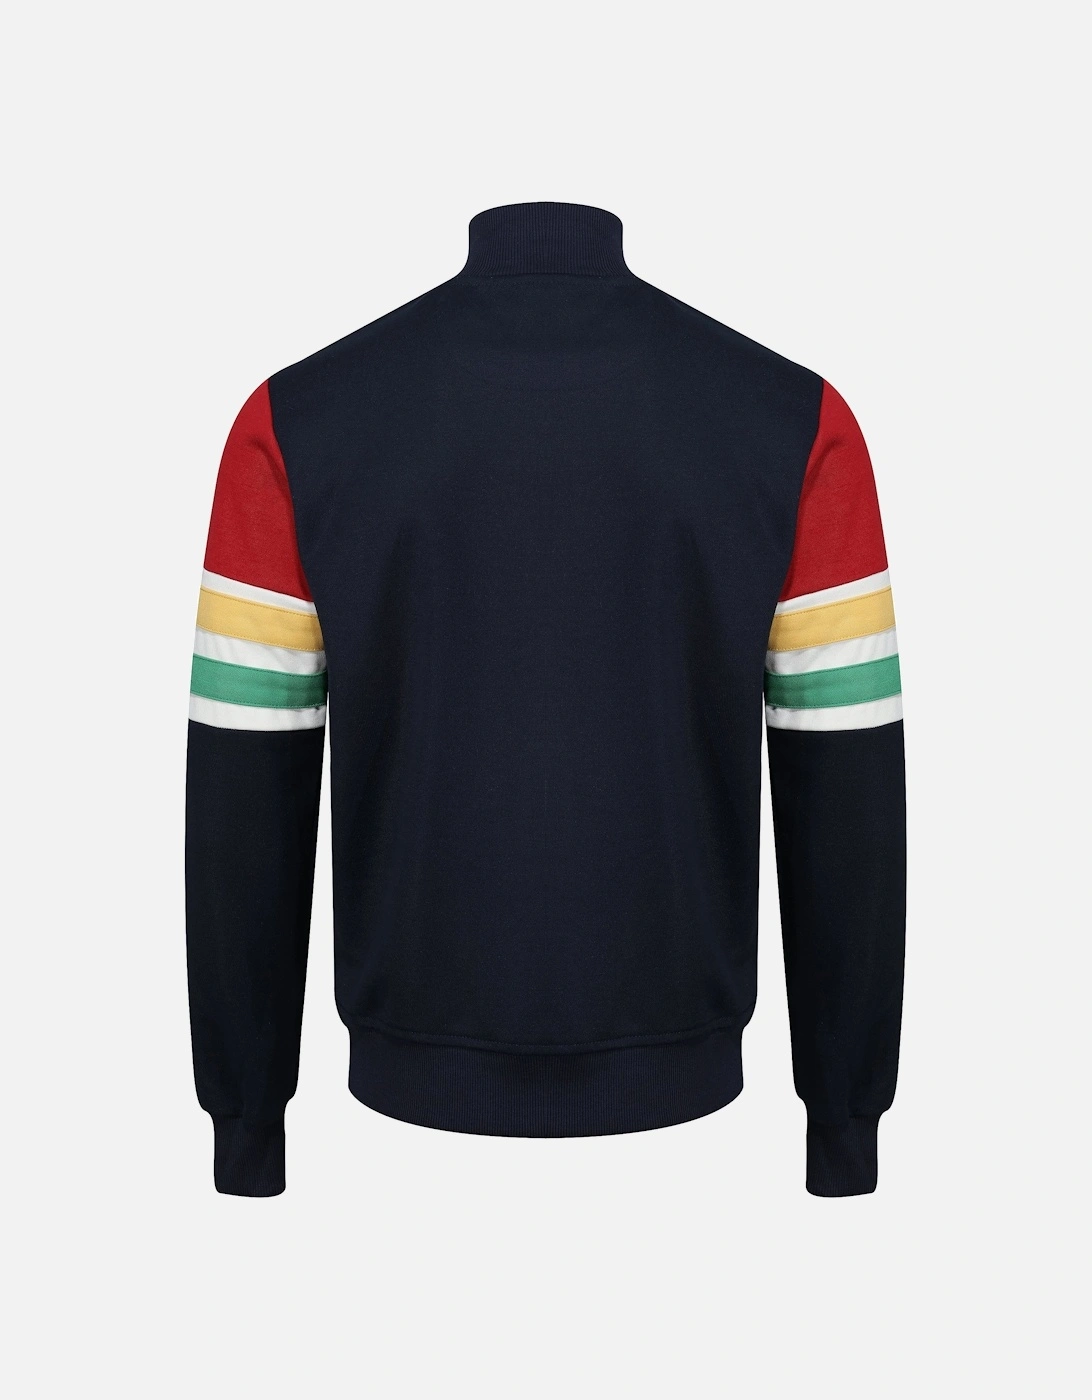 Trojan Marley Stripe Sleeve Track Jacket - Navy